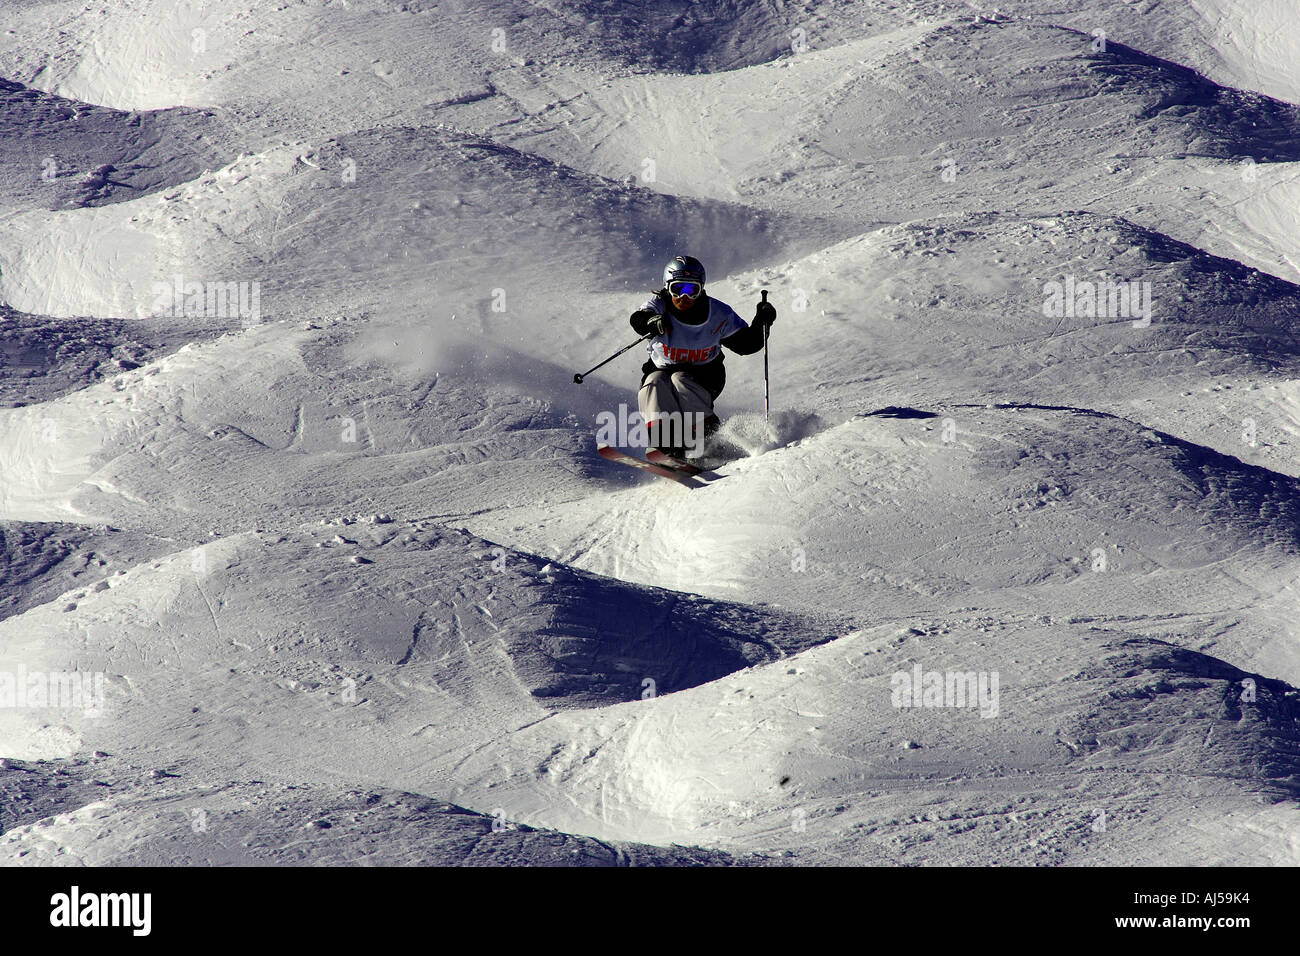 Frauen Ski s Buckelpiste Stockfotografie - Alamy